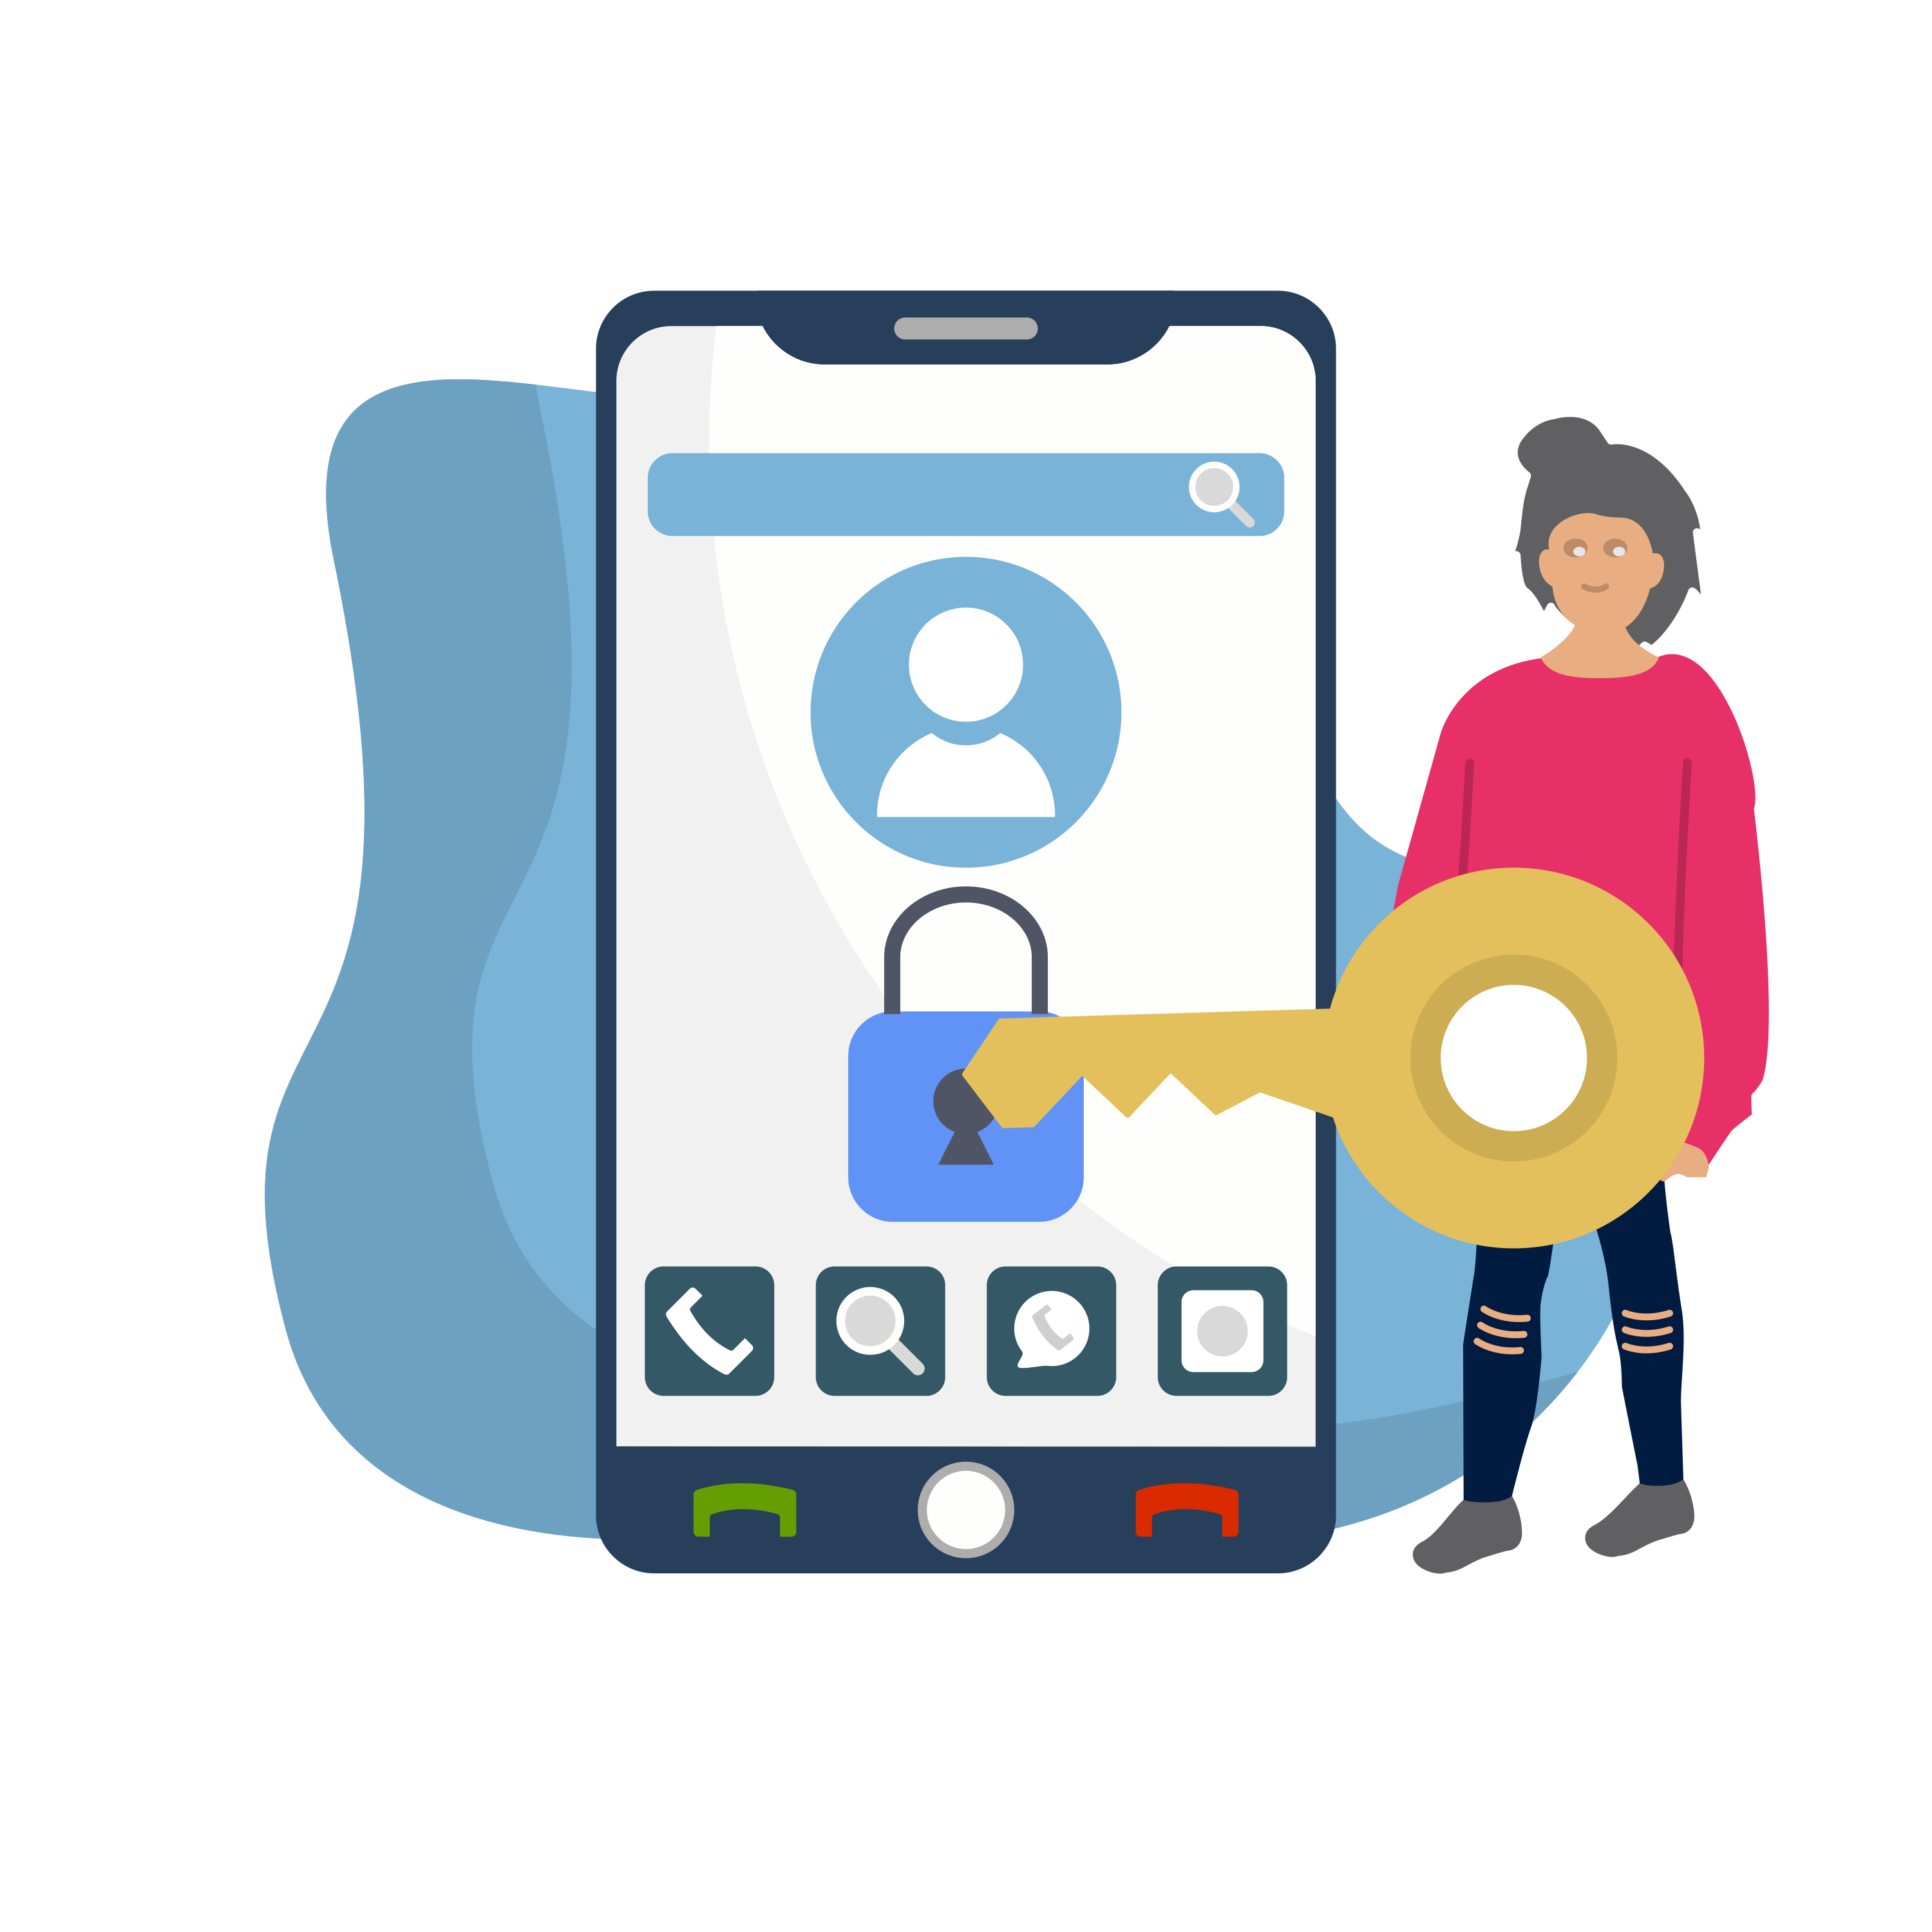 smartphonelock-account-lock-user-password-protection-safe-illustration